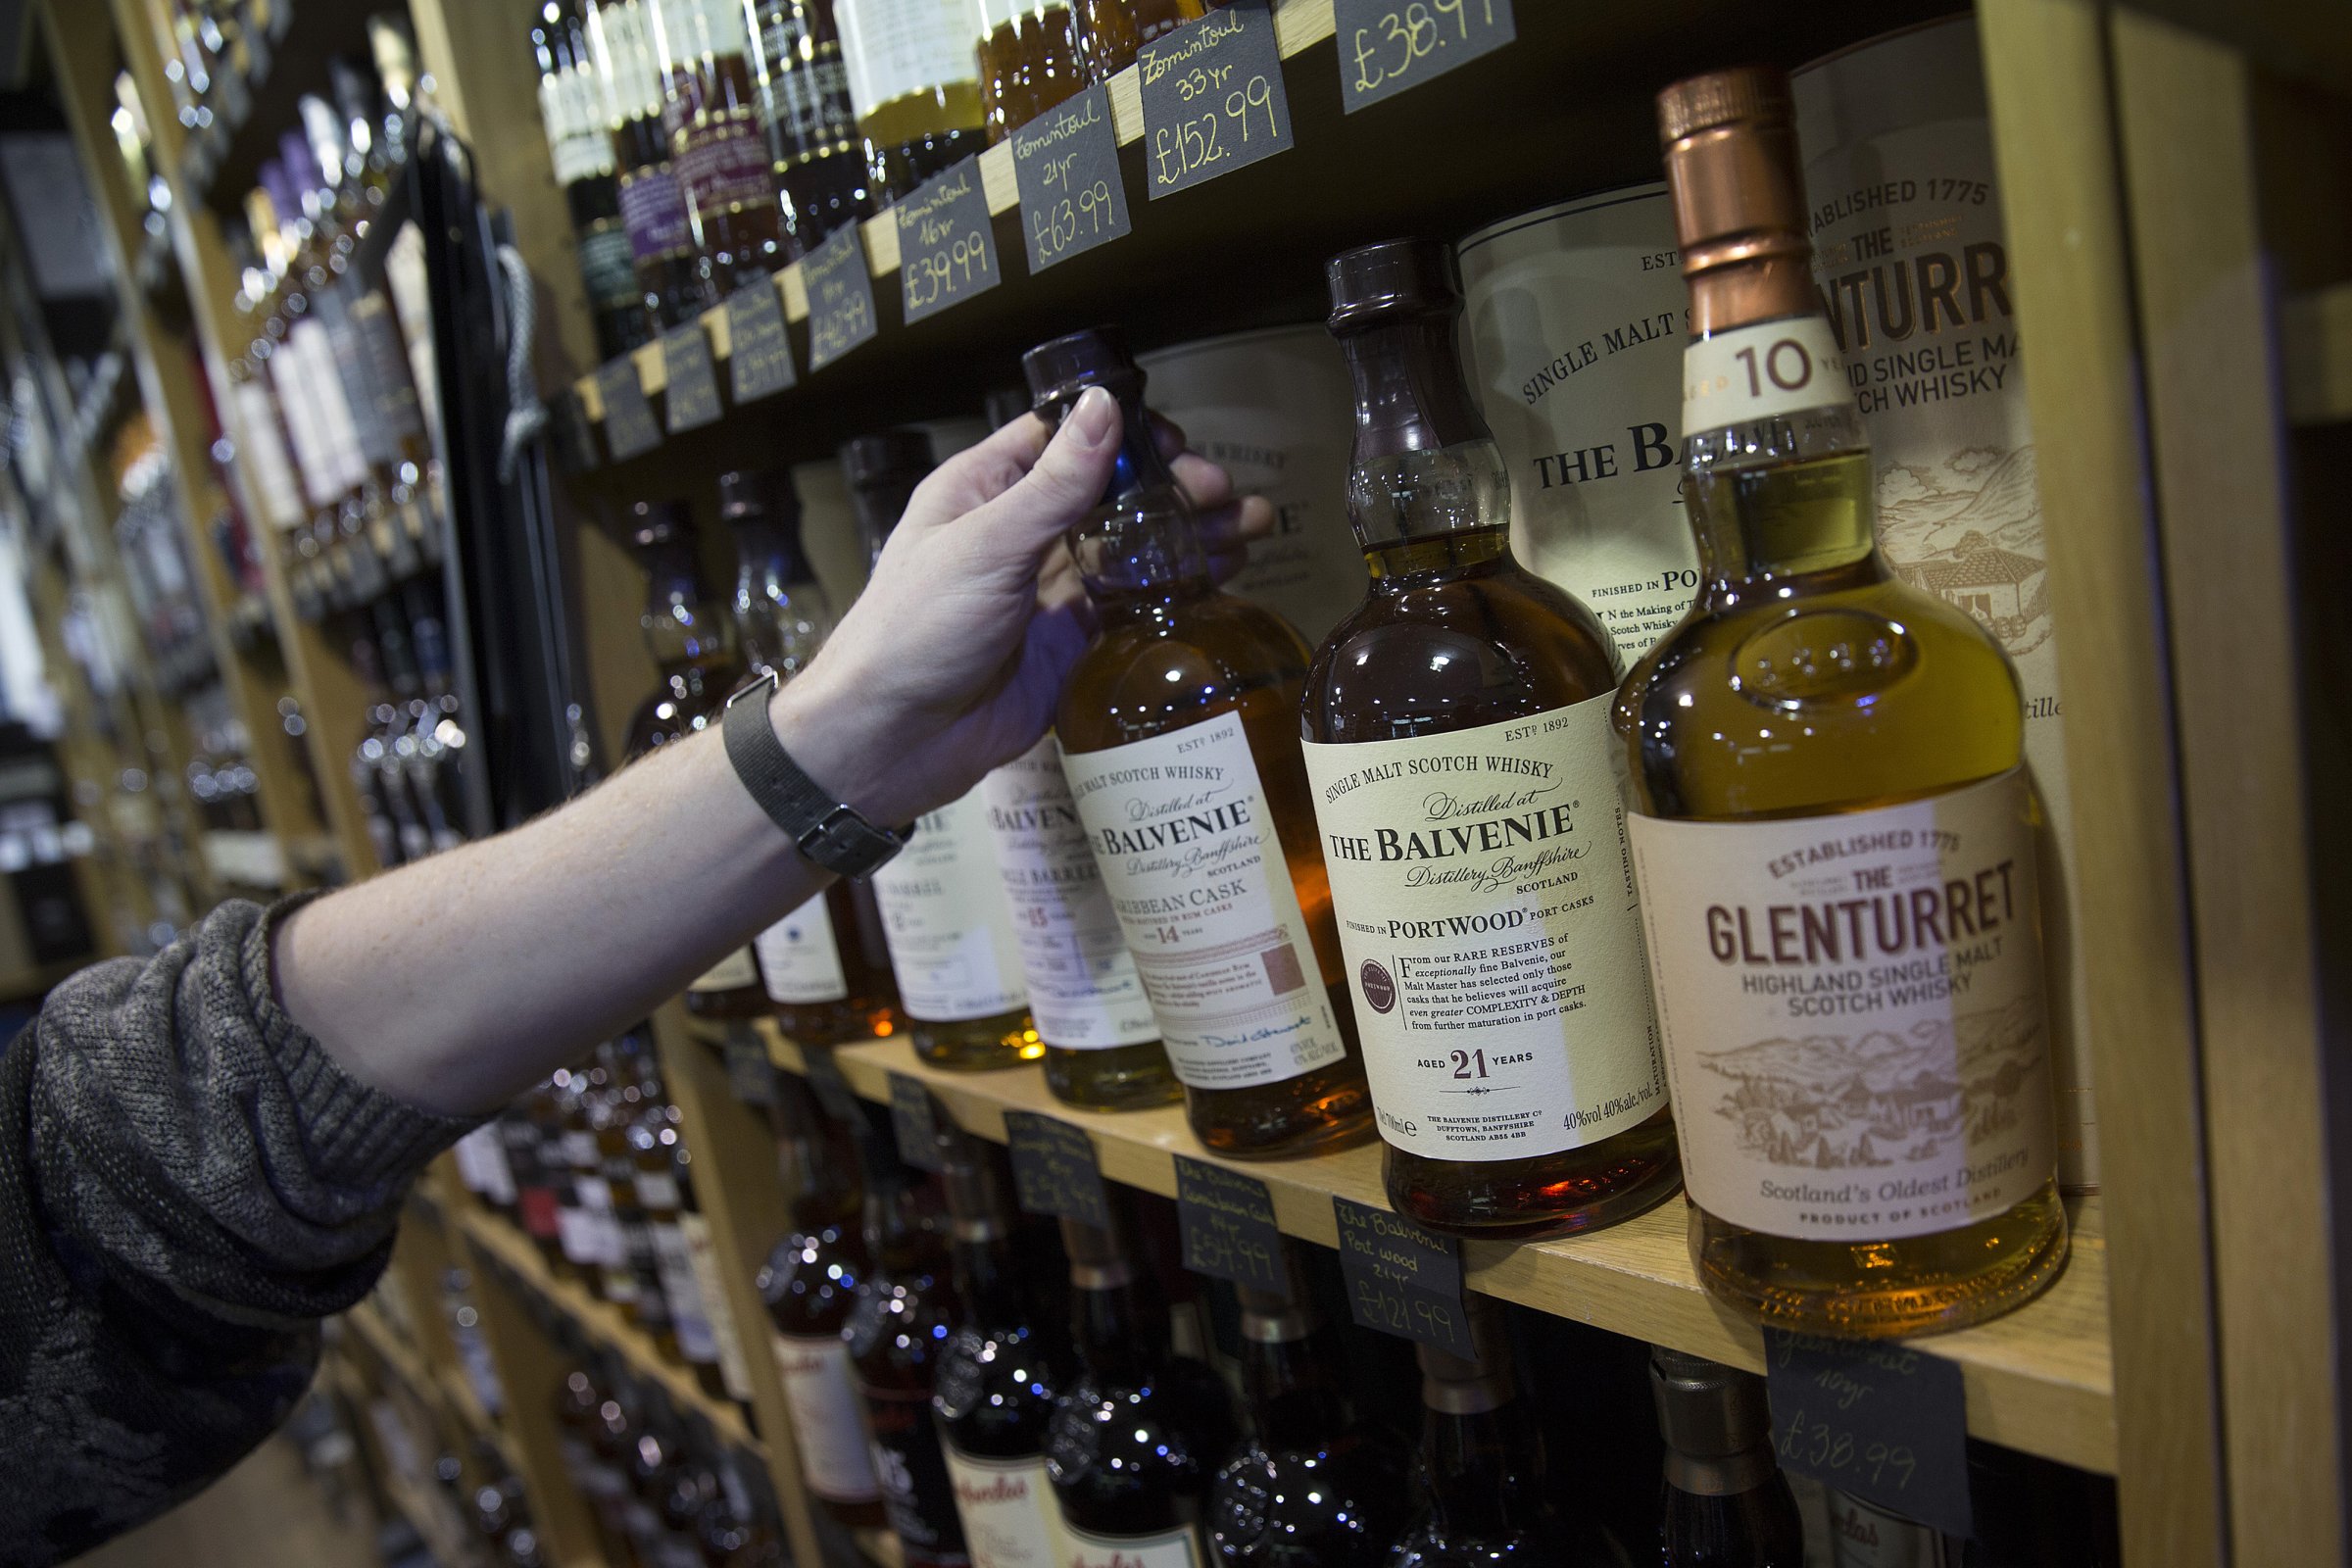 A whisky store in Edinburgh, Scotland, seen in Jan. 2014.